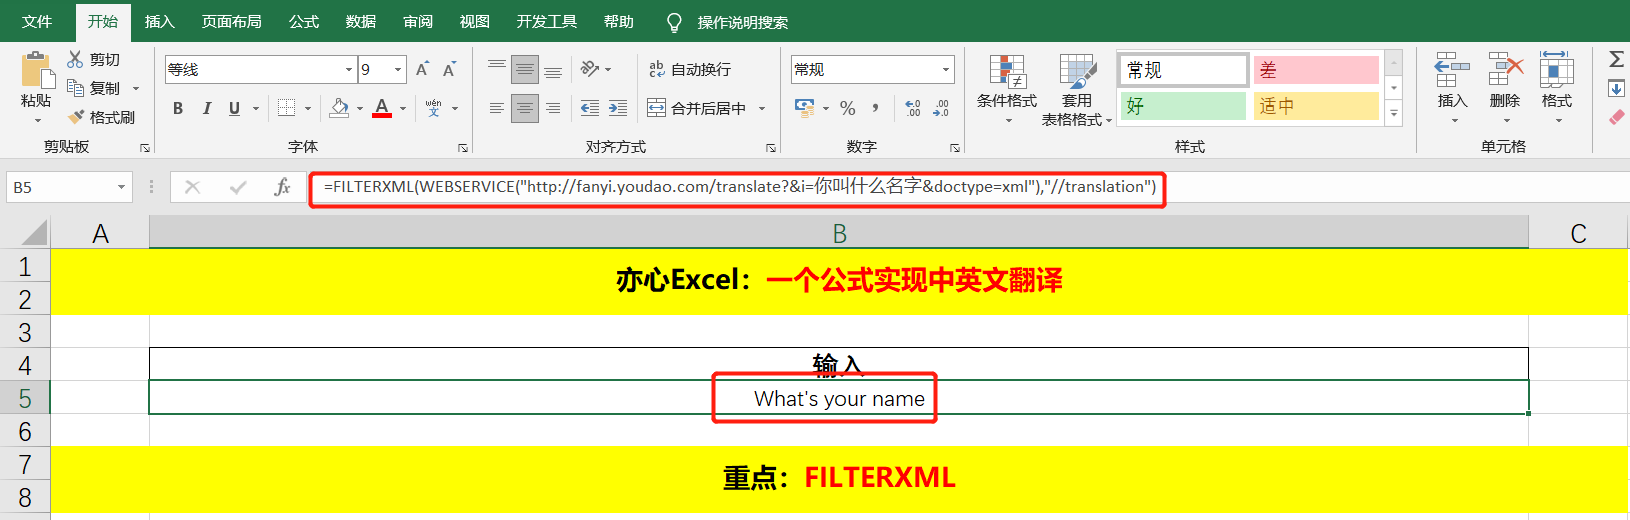 Excel技巧—一个公式实现中英文翻译